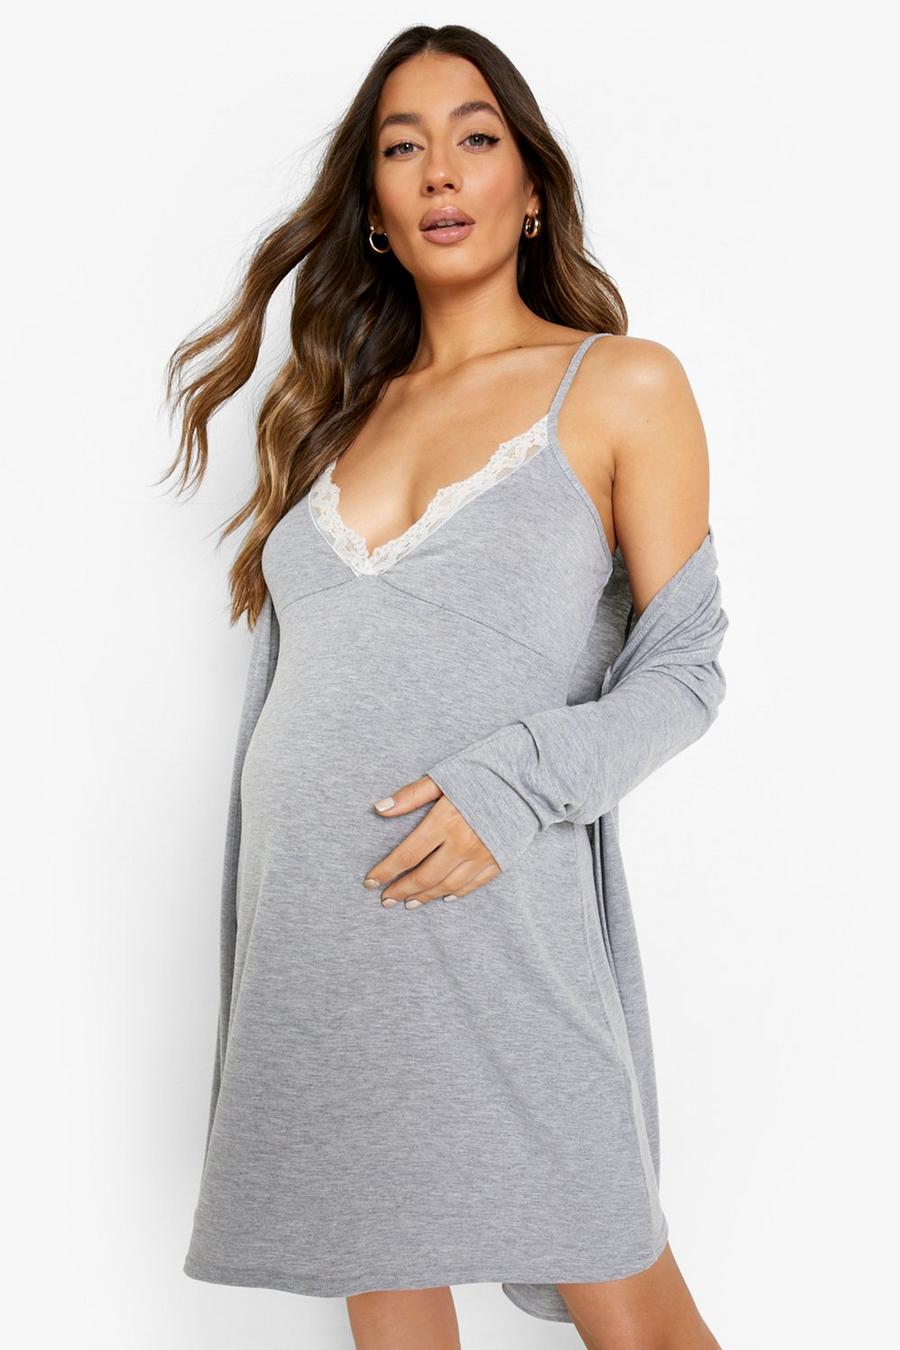 Womens Spaghetti Straps Lace Trim Maternity Nightgown Sleepwear Dress NOT for Breastfeeding 